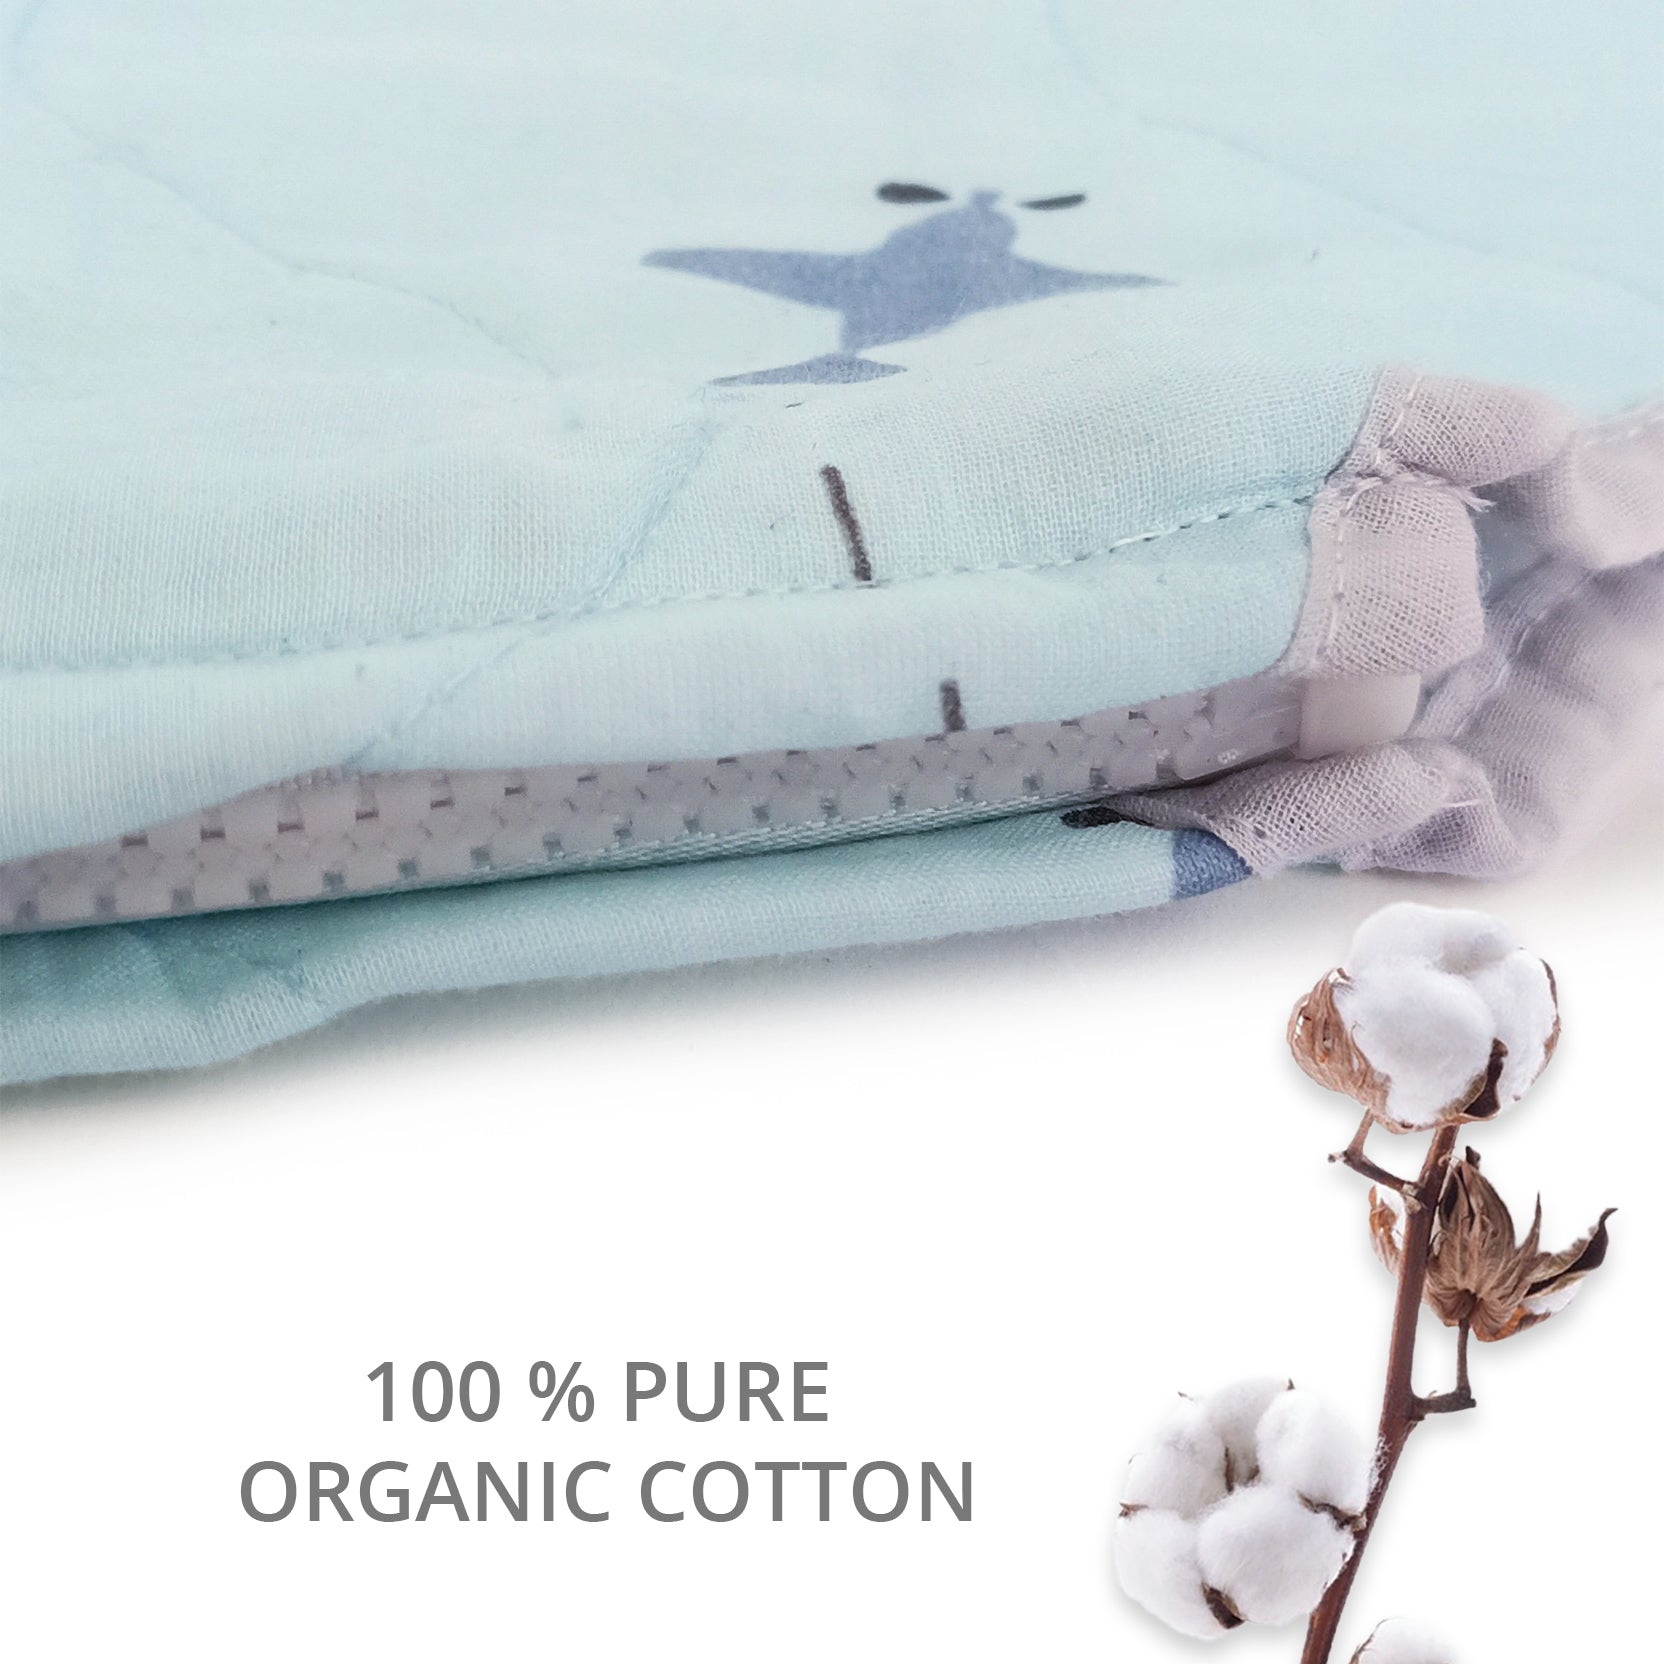 The White Cradle Baby Sleeping Bag for Infants & Newborns (Boys) - Aeroplane